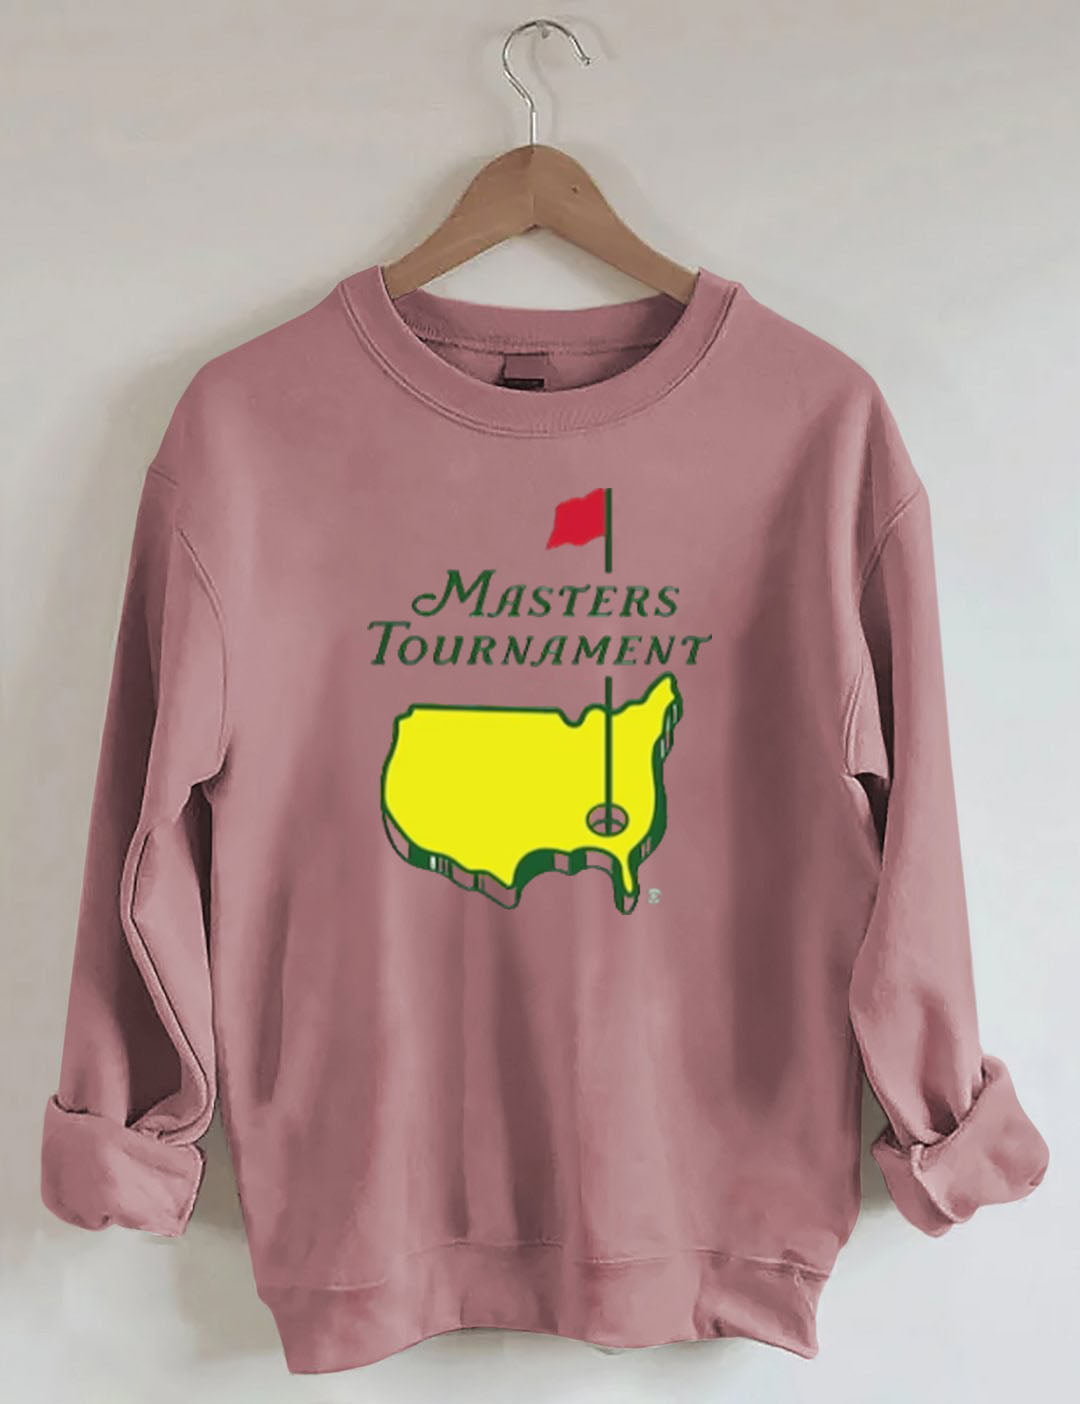 Golf Master Tournament sweatshirt